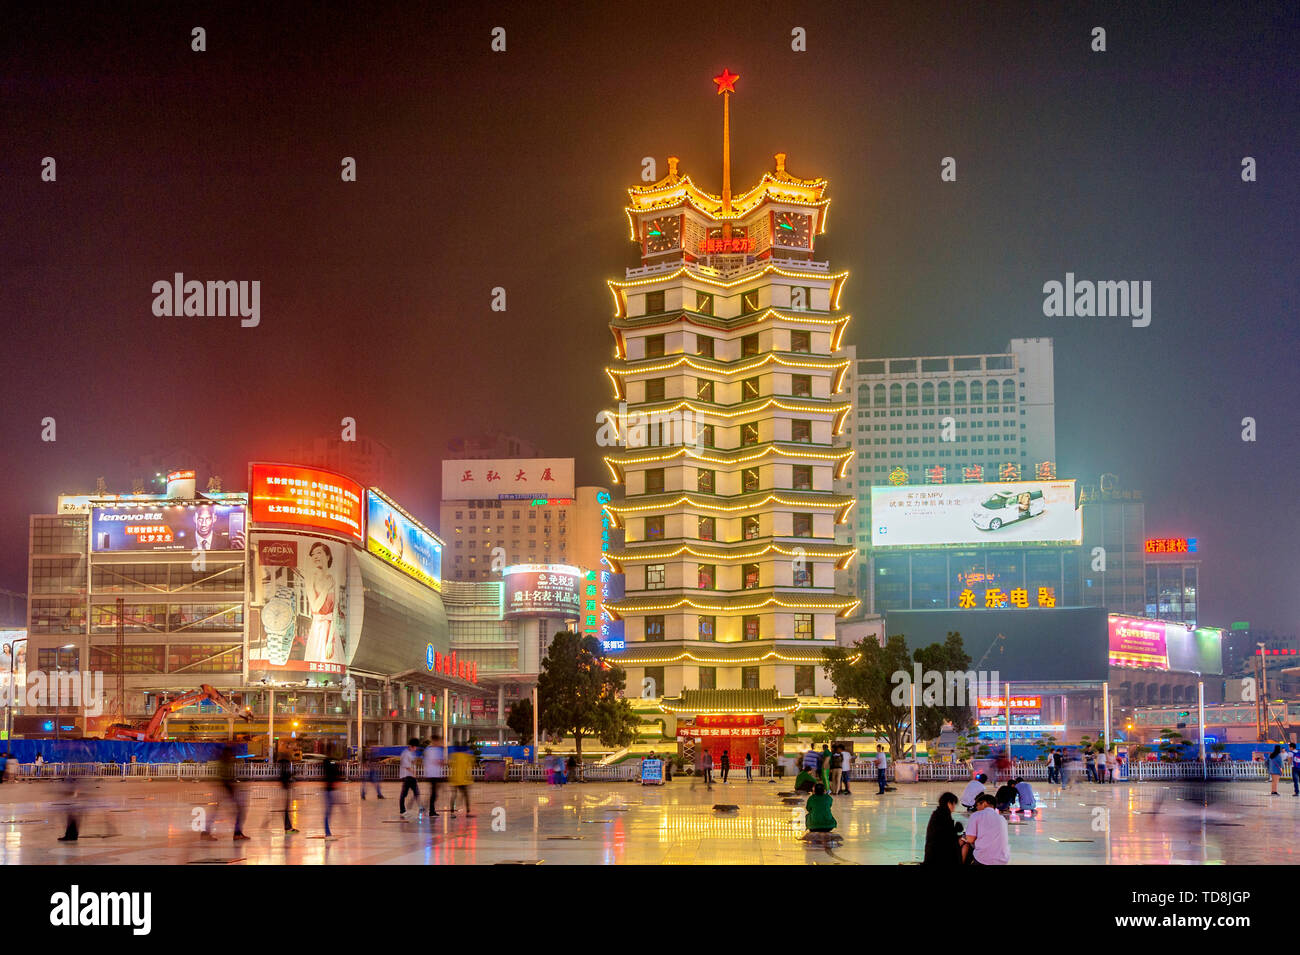 27th Plaza, Zhengzhou, Henan Province Stock Photo